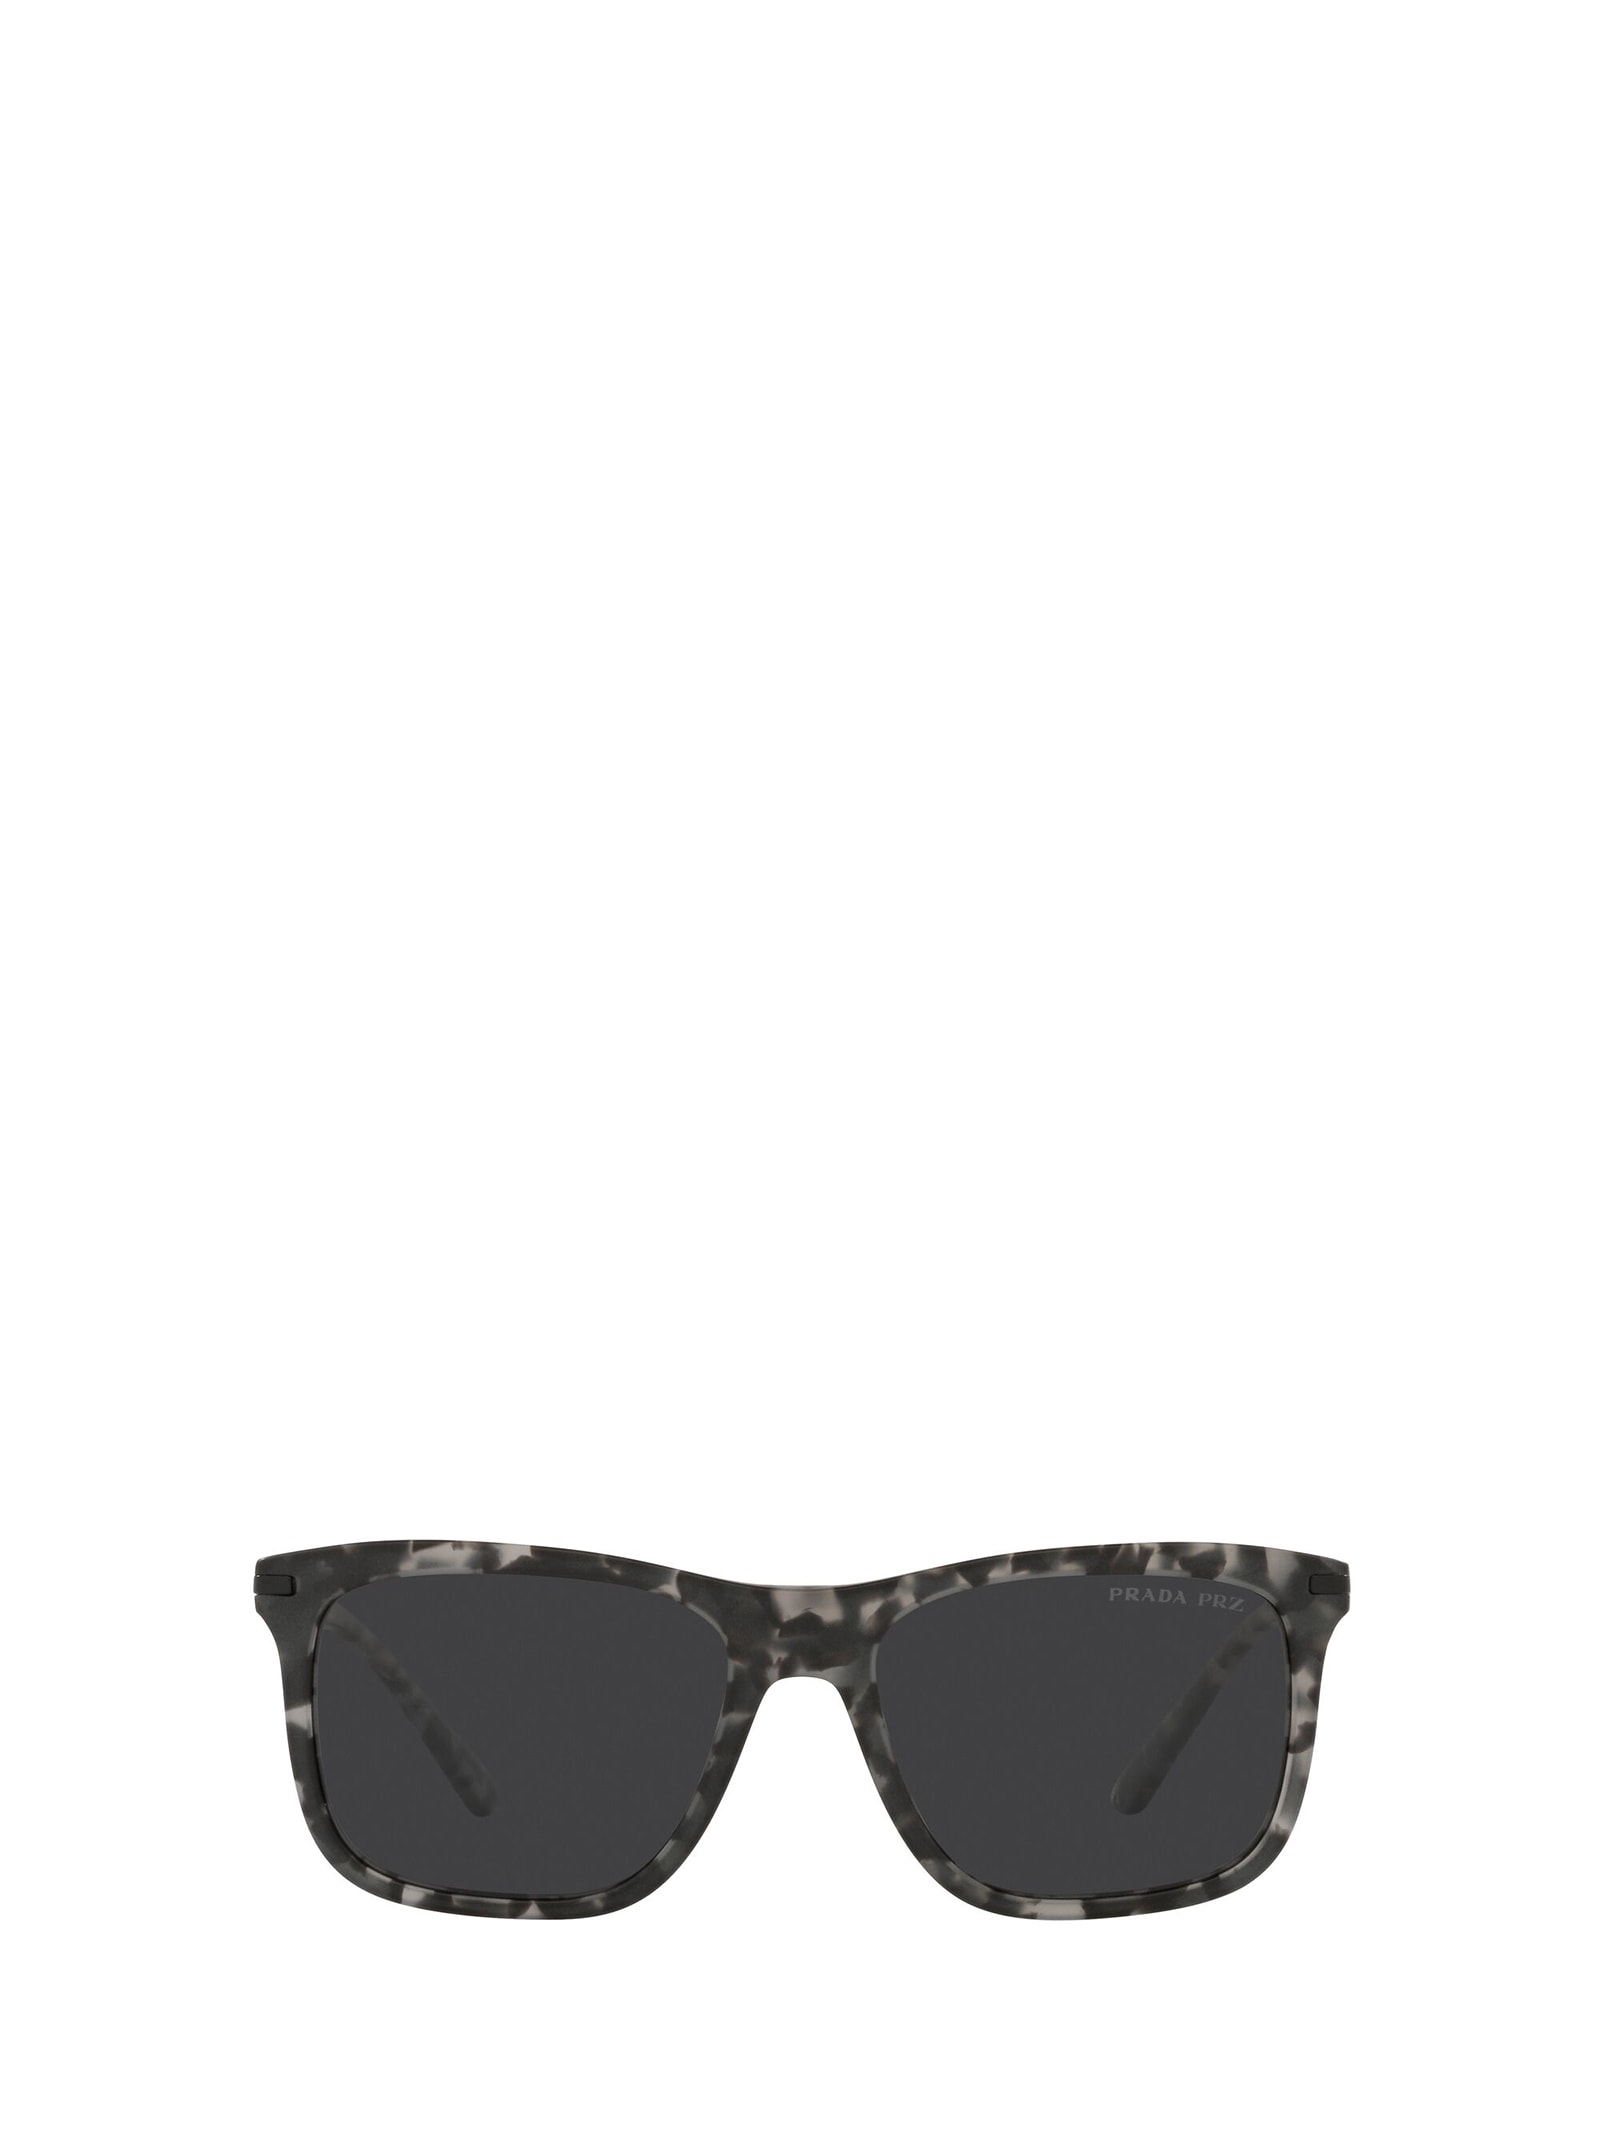 Prada Eyewear Prada Pr 18ws Matte Dark Grey Tortoise Sunglasses